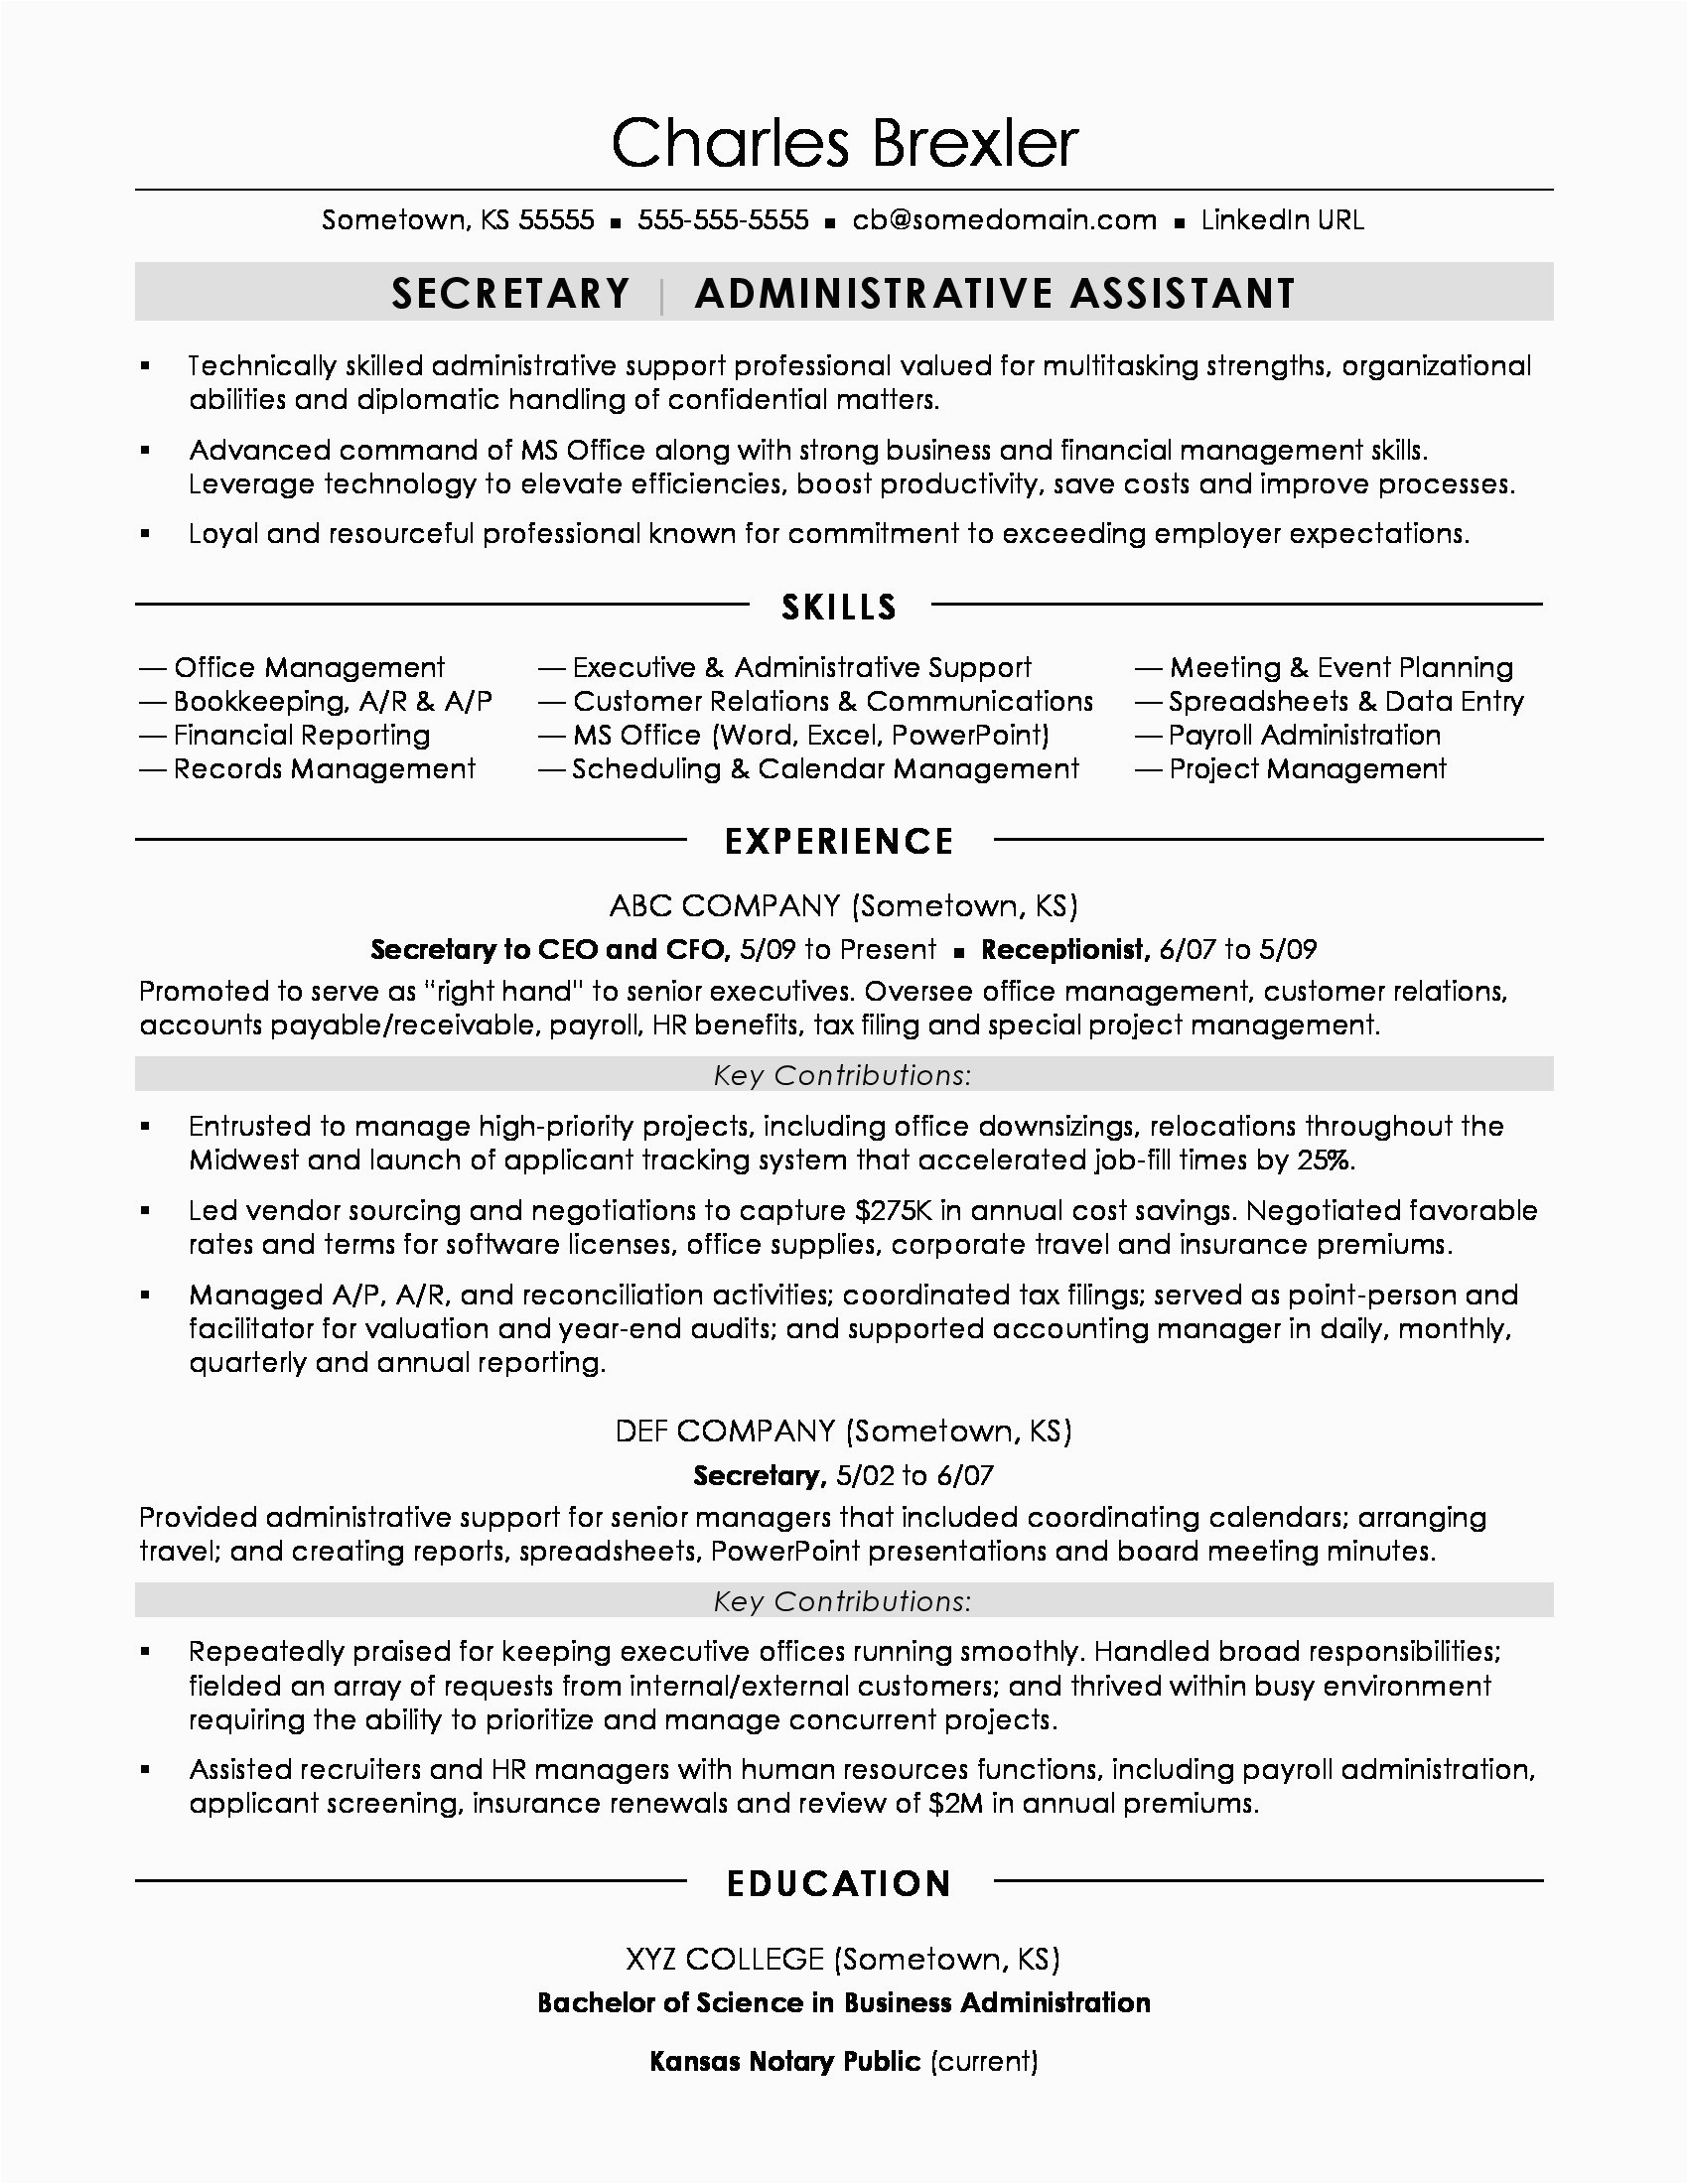 Sample Resume for Secretary Of the Company Secretary Resume Sample